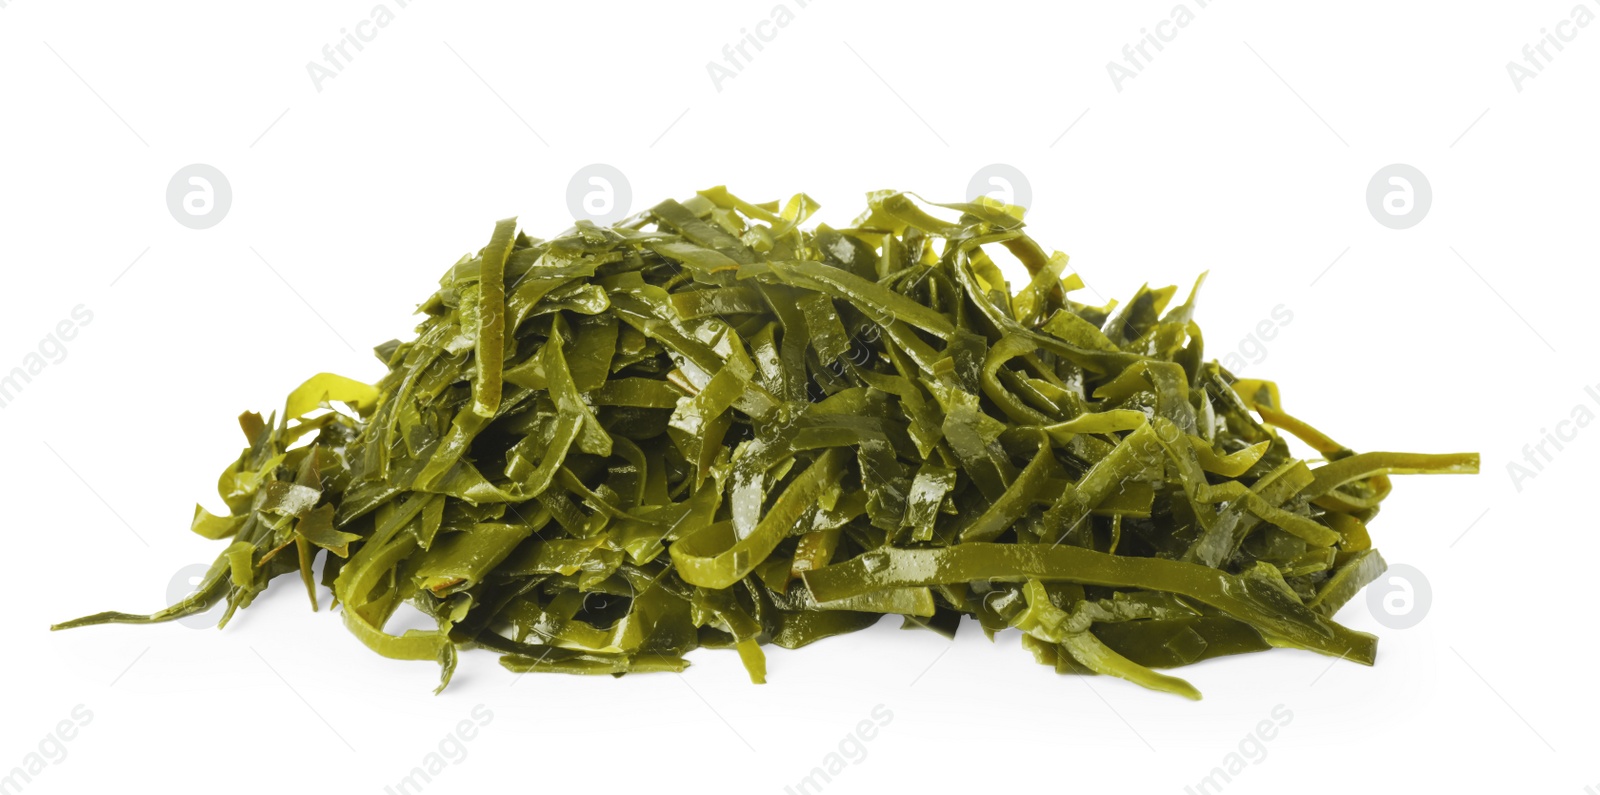 Photo of Fresh laminaria (kelp) seaweed isolated on white